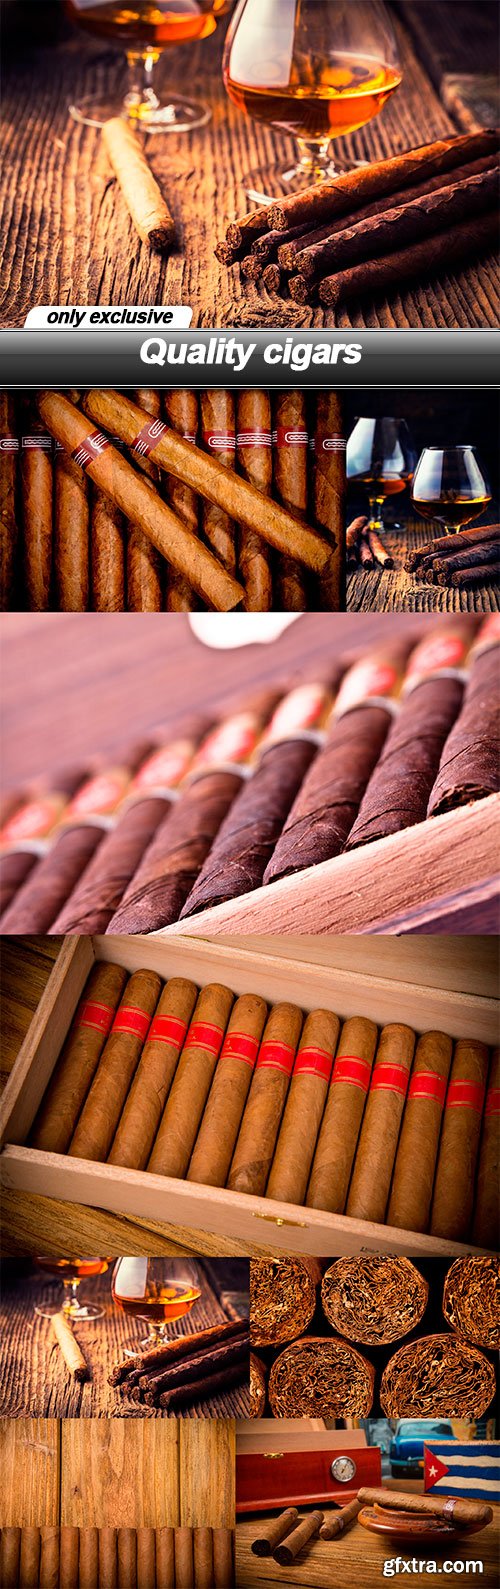 Quality cigars - 8 UHQ JPEG